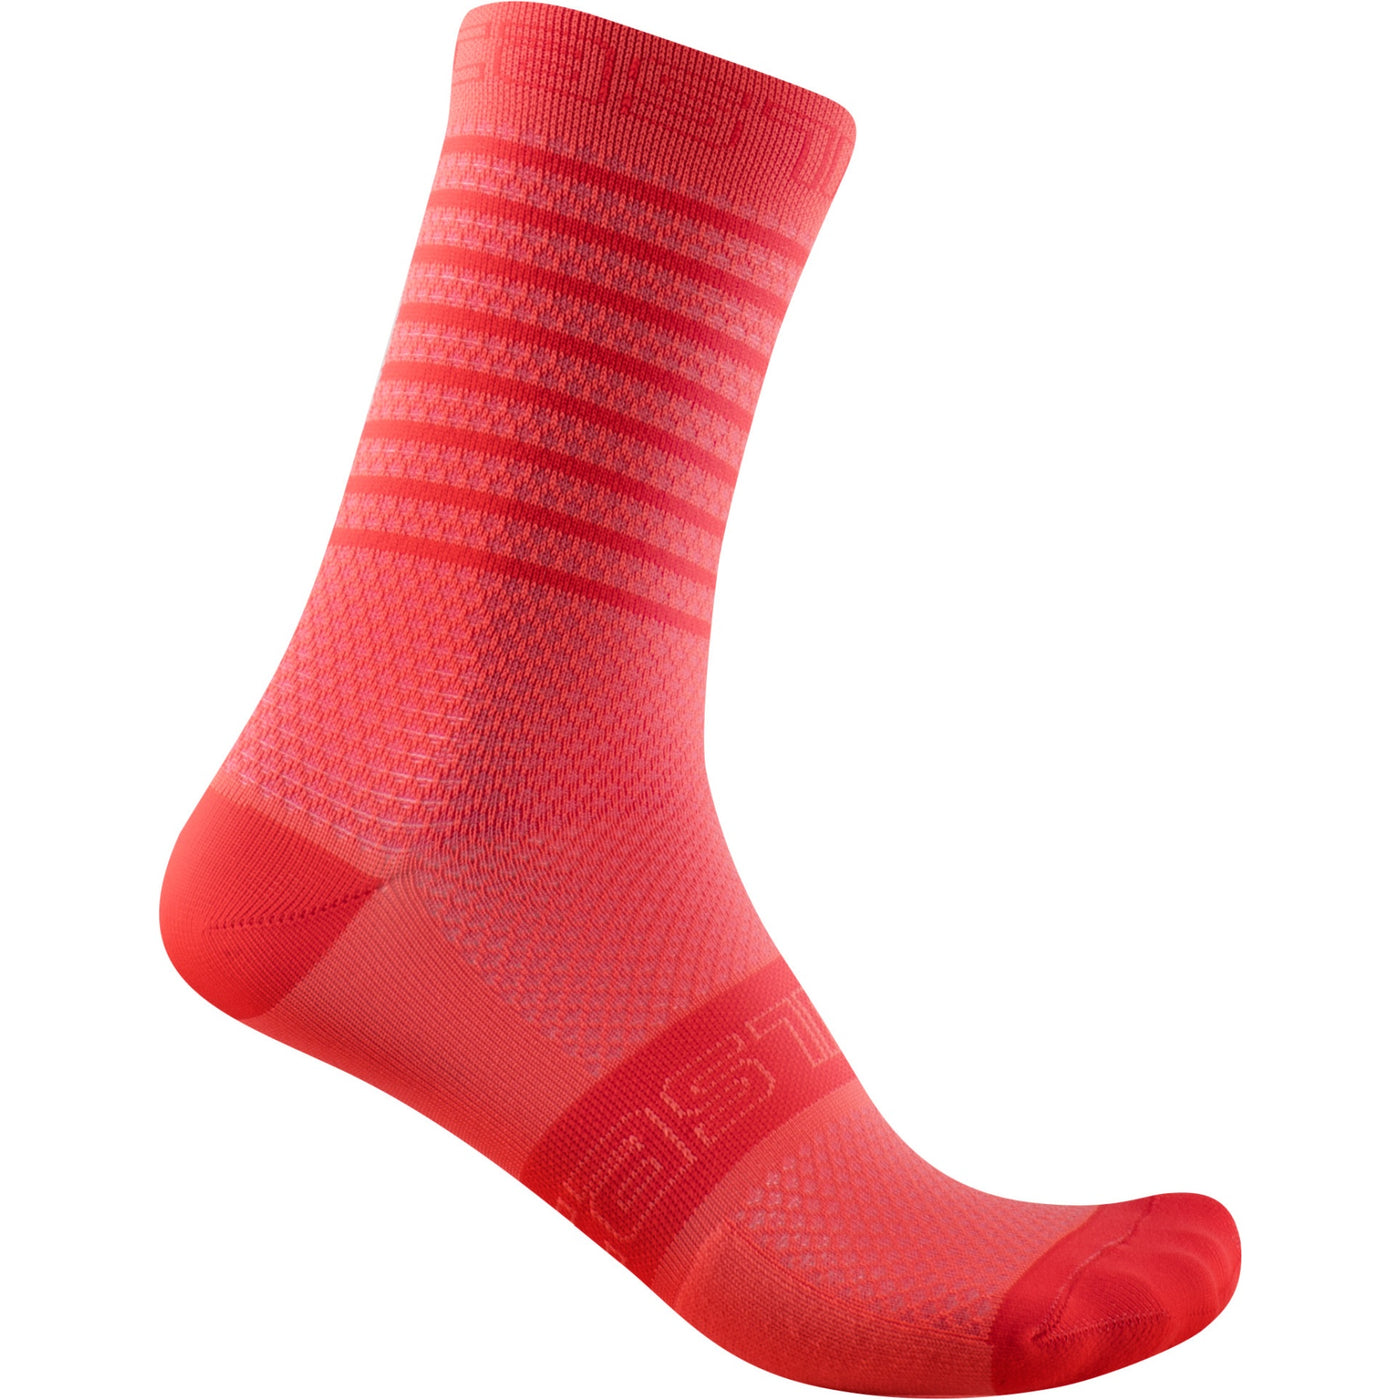 Castelli Superleggera W 12 Socks Women (Brilliant pink)